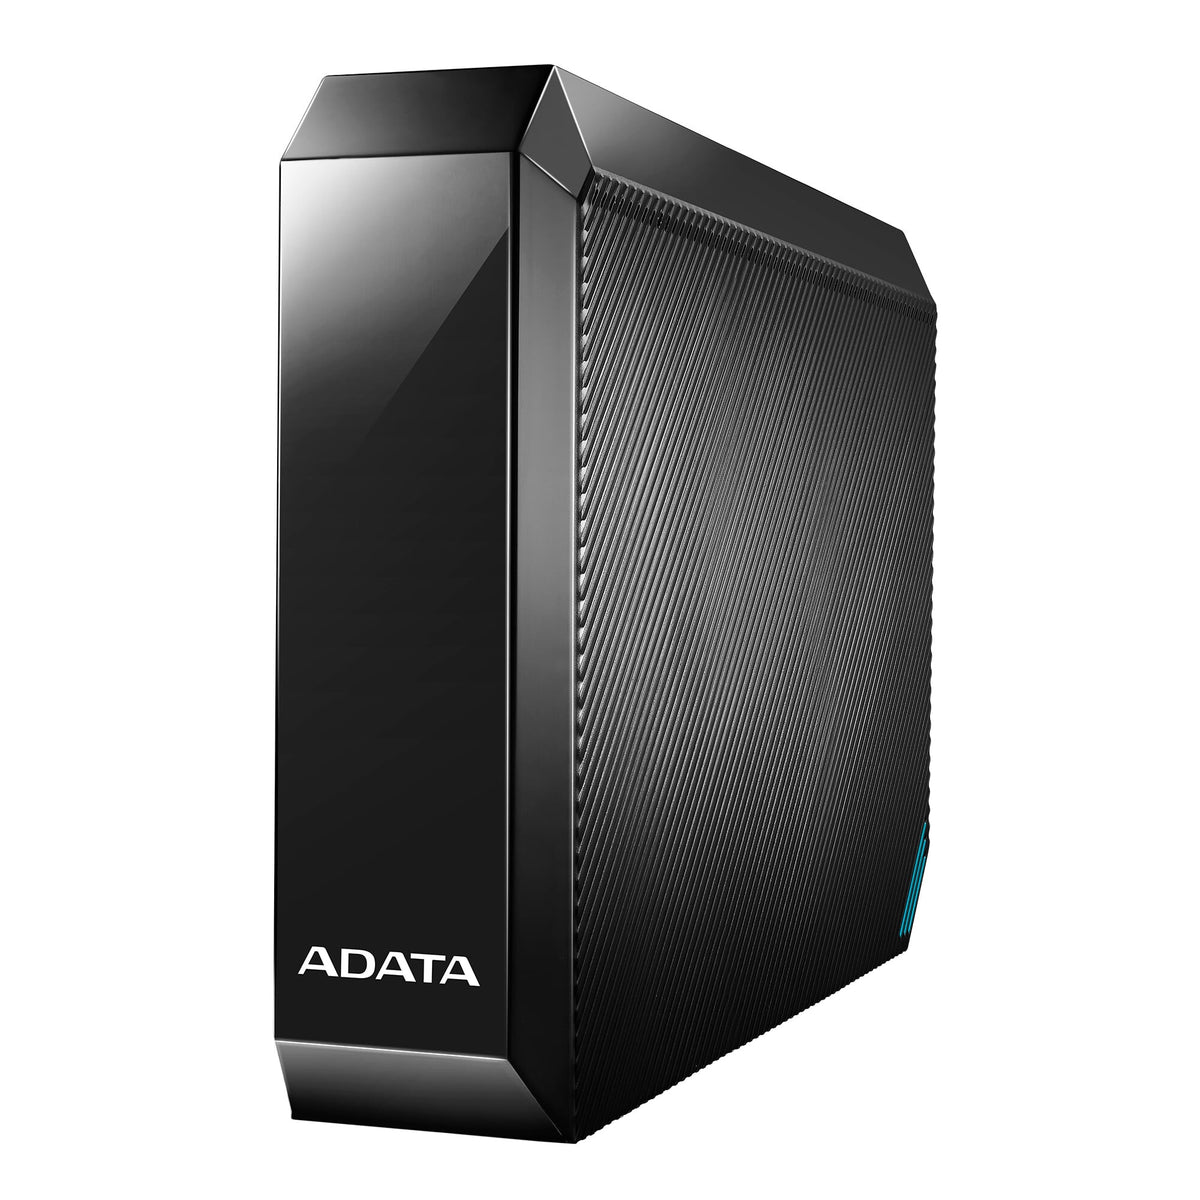 ADATA HM800 - External HDD in Black - 4 TB